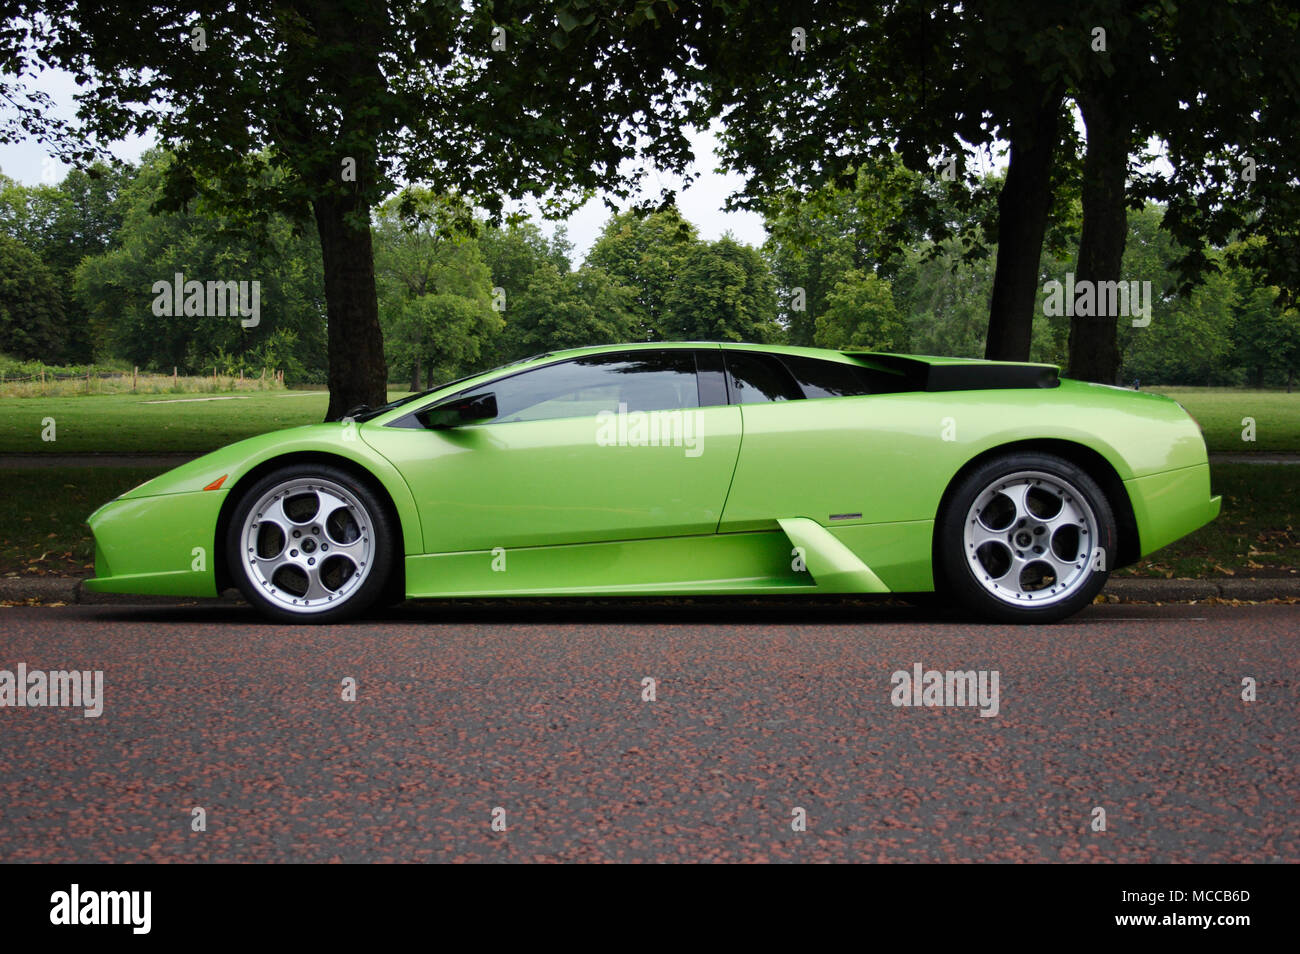 Lime Green Lamborghini Murcielago supercar oder hypercar im Profil (Seitenansicht) Stockfoto